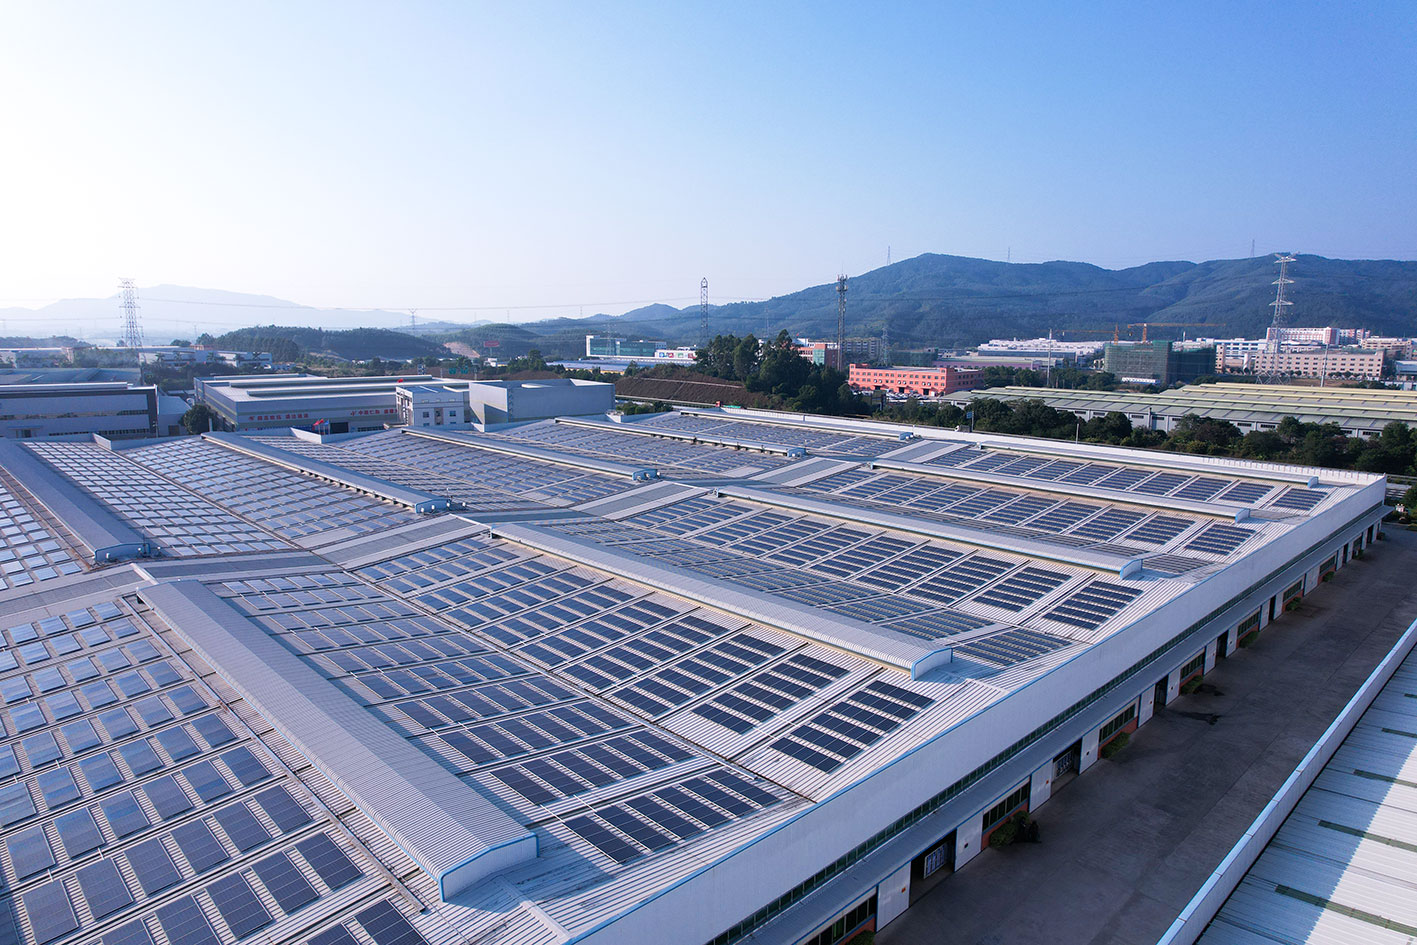 Kaiping Cuishan Lake Solar Power Project developed by Kaipu New Energy Company & HAIHONG